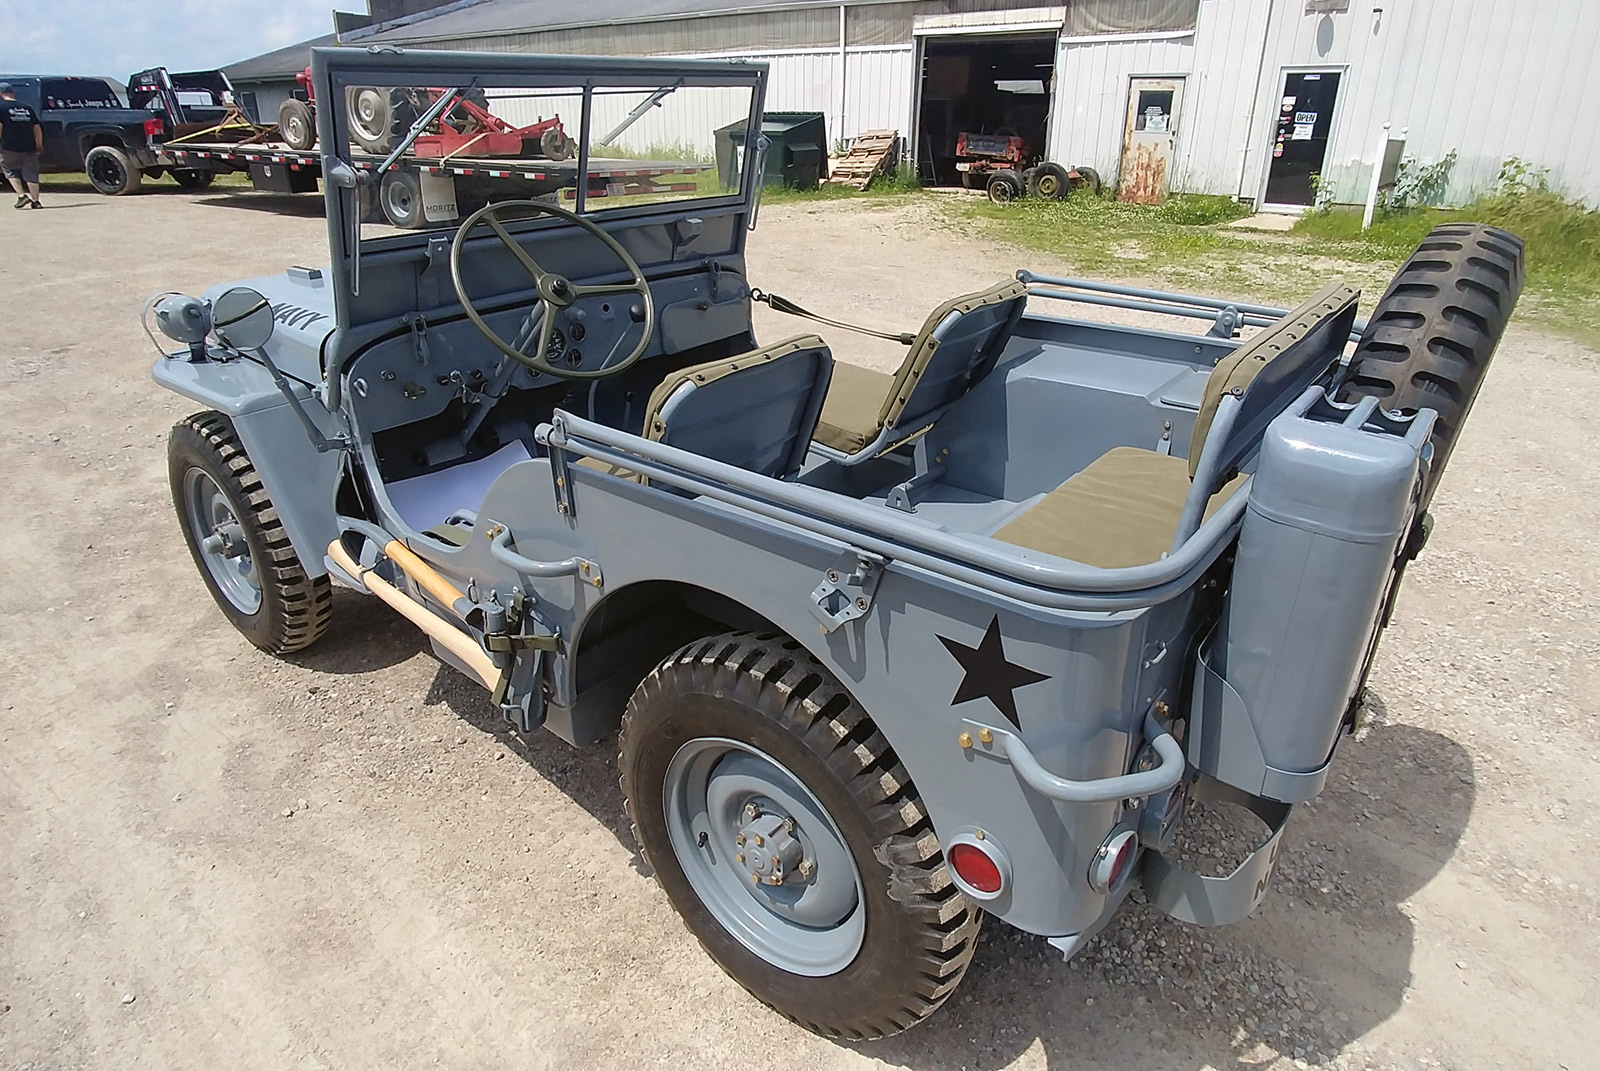 Ohio Restorer's Lifelong Love of Vintage Willys Jeeps -  Motors Blog